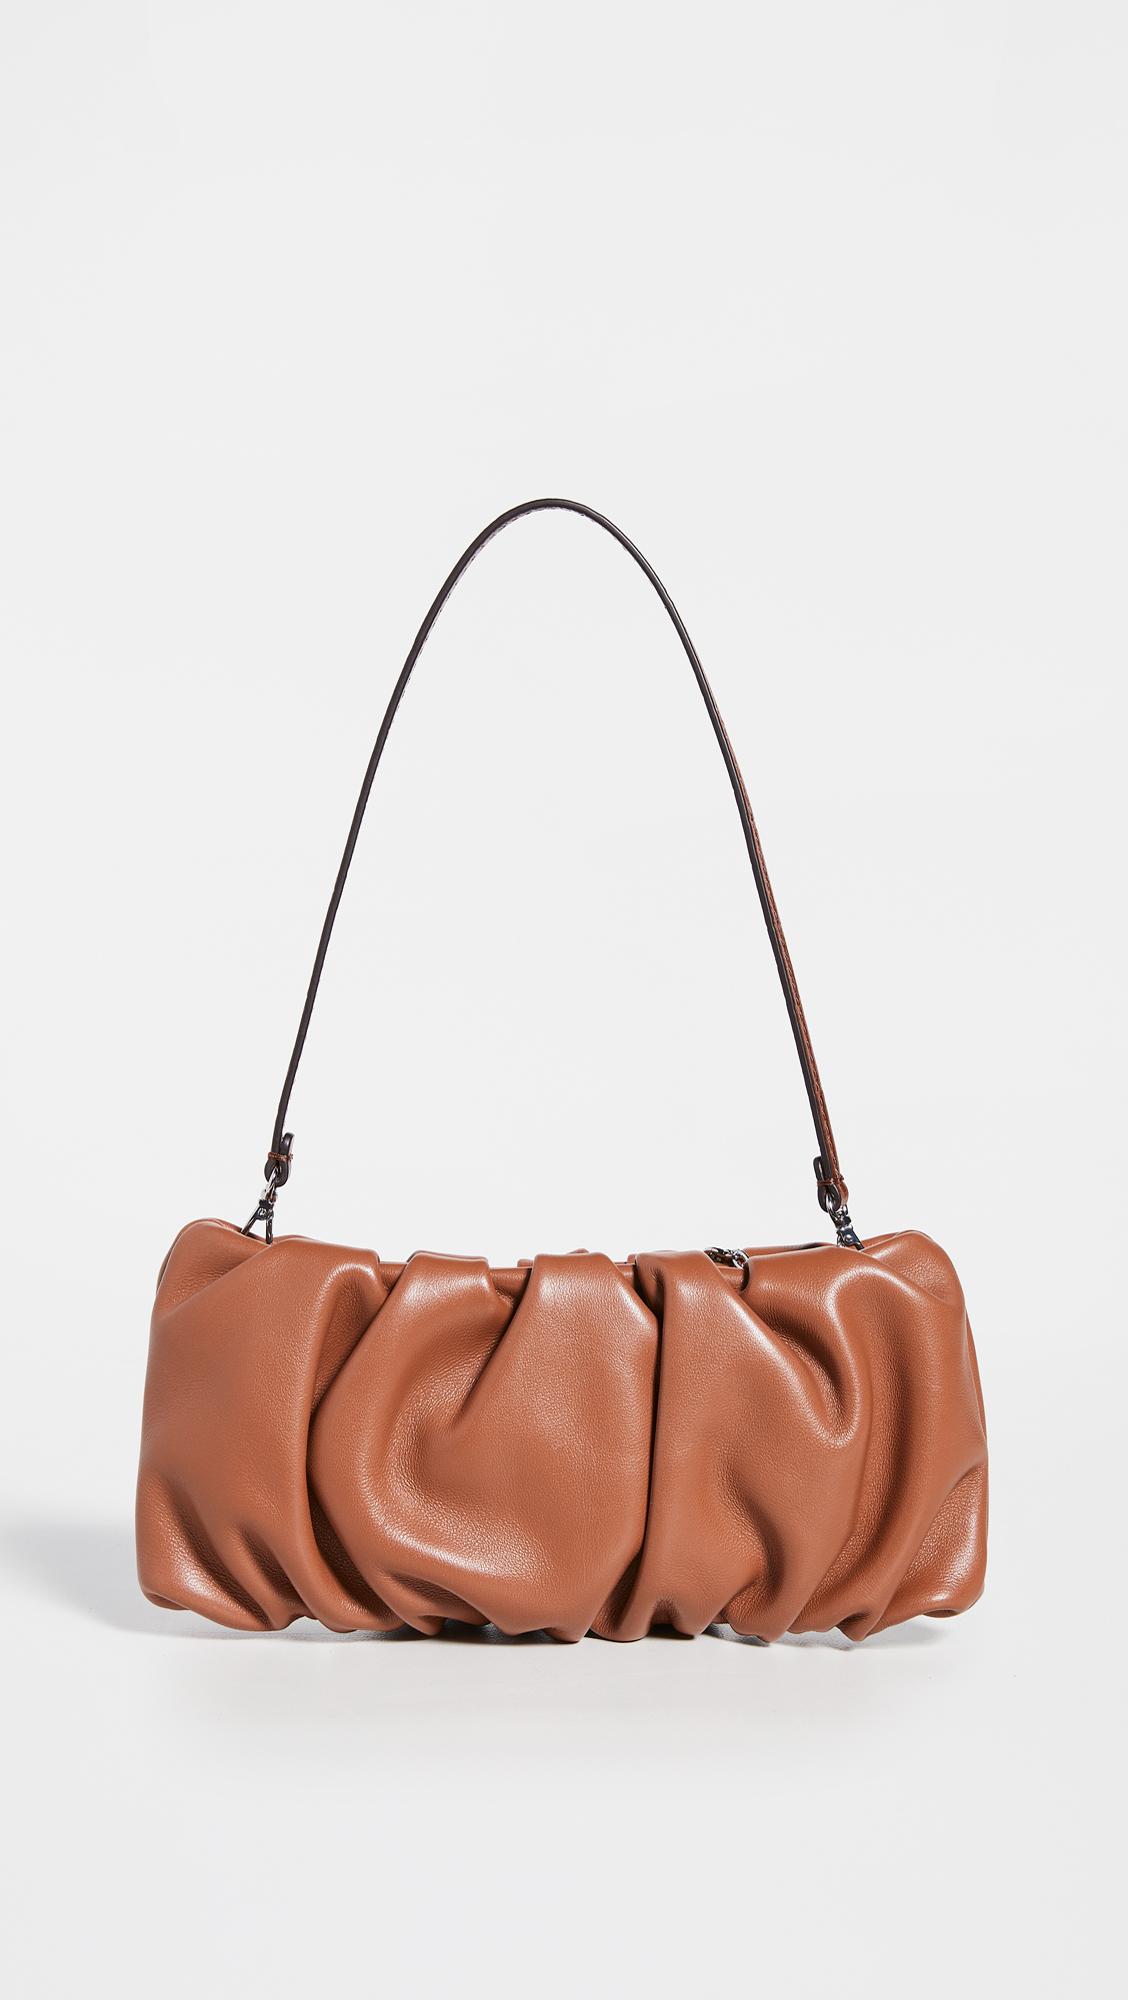 STAUD Leather Bean Bag in Tan (Brown) - Lyst